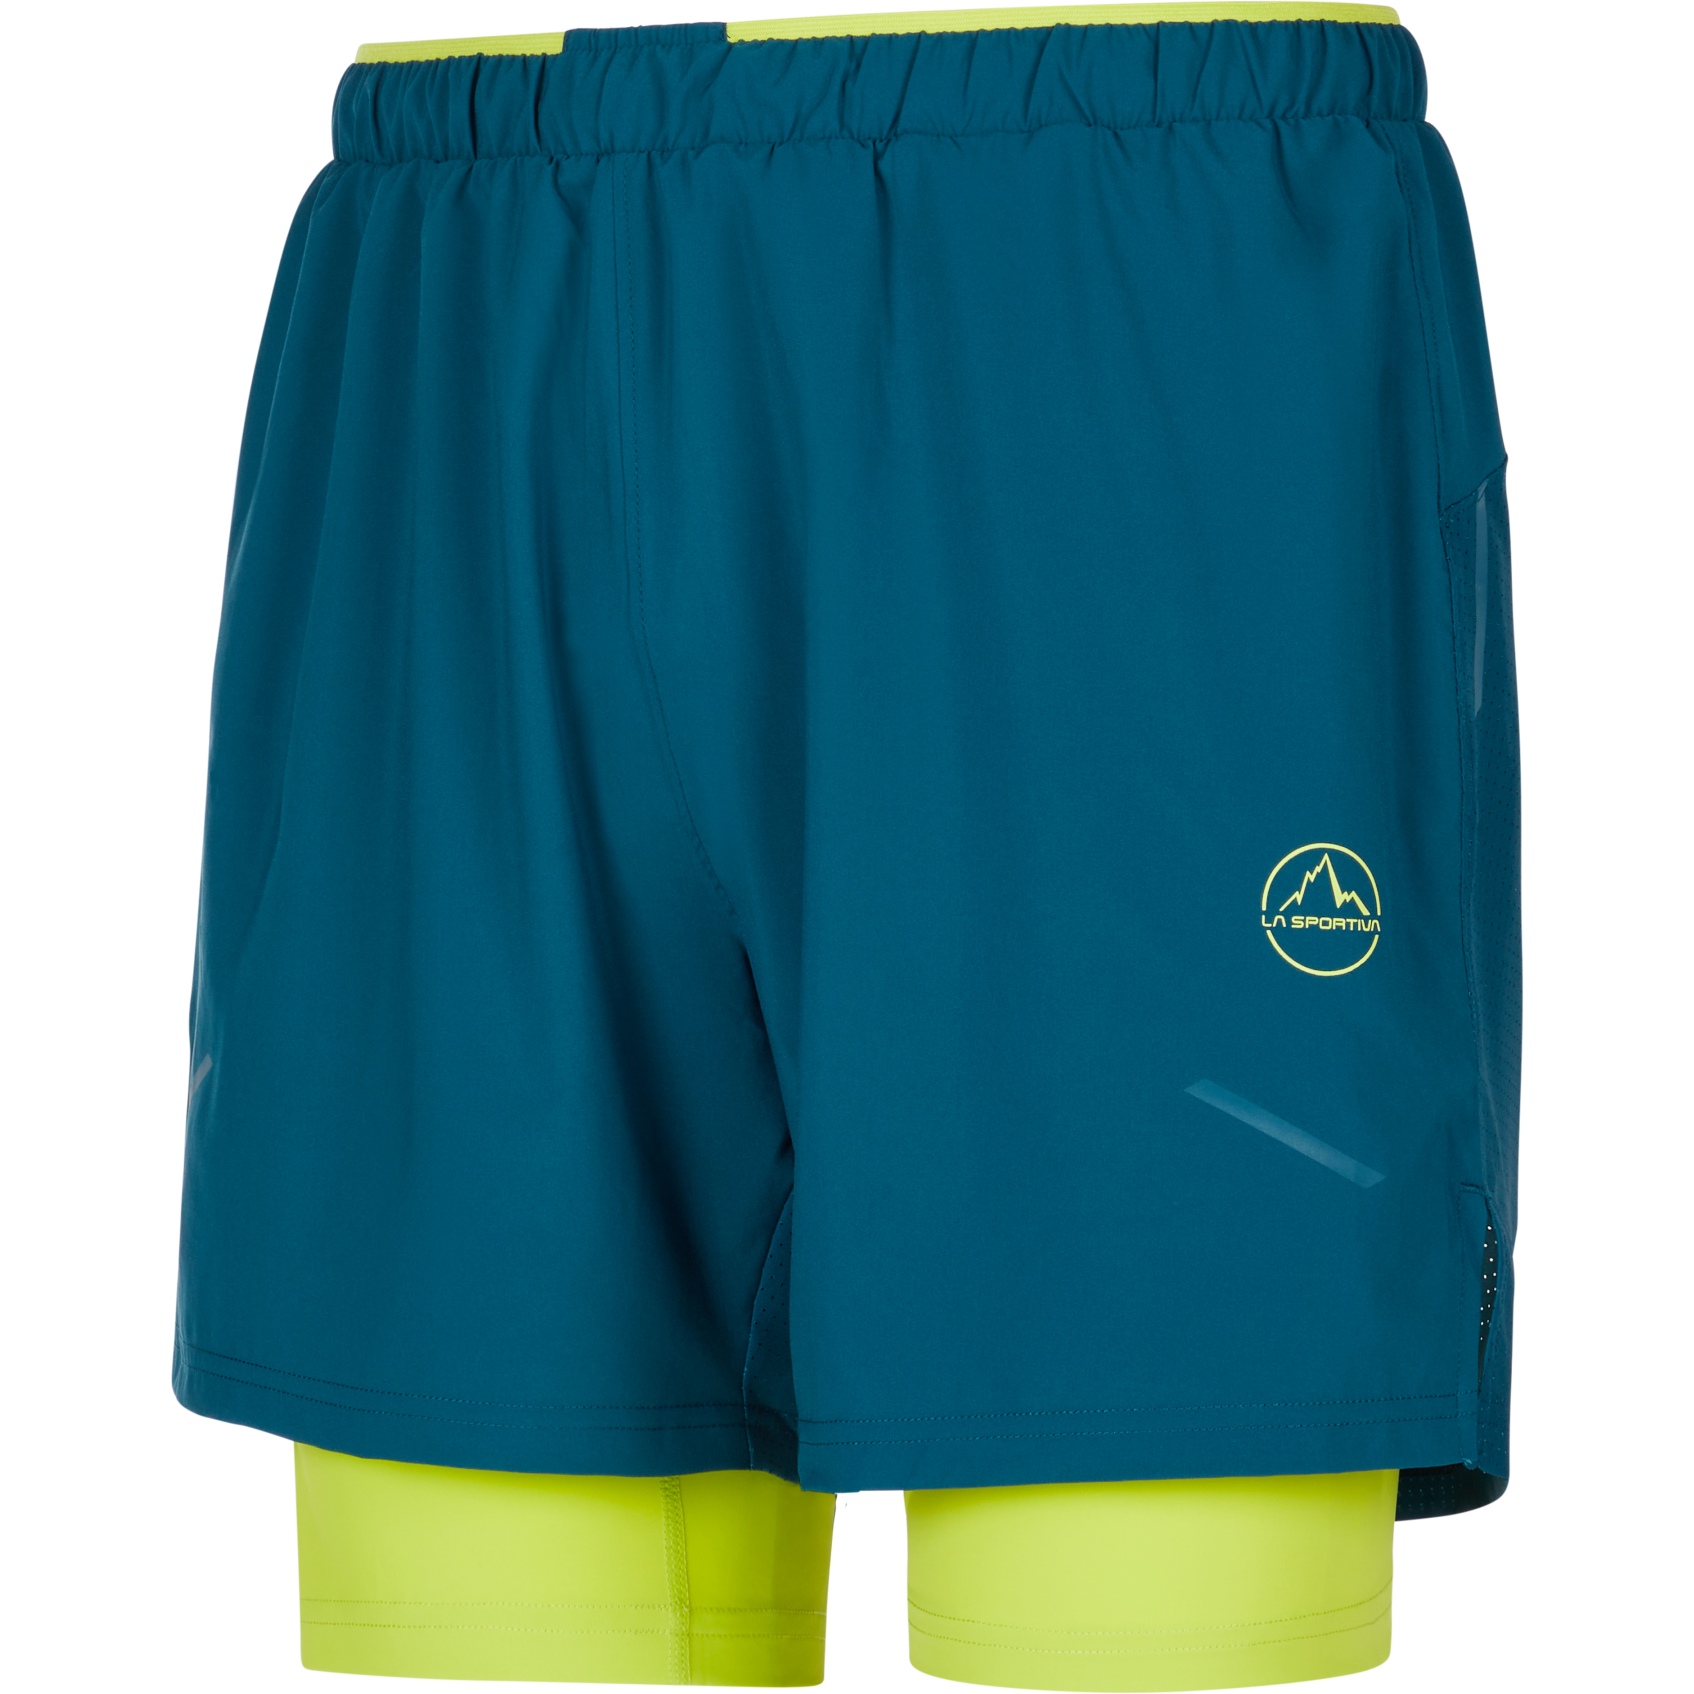 Picture of La Sportiva Trail Bite Shorts Men - Storm Blue/Lime Punch